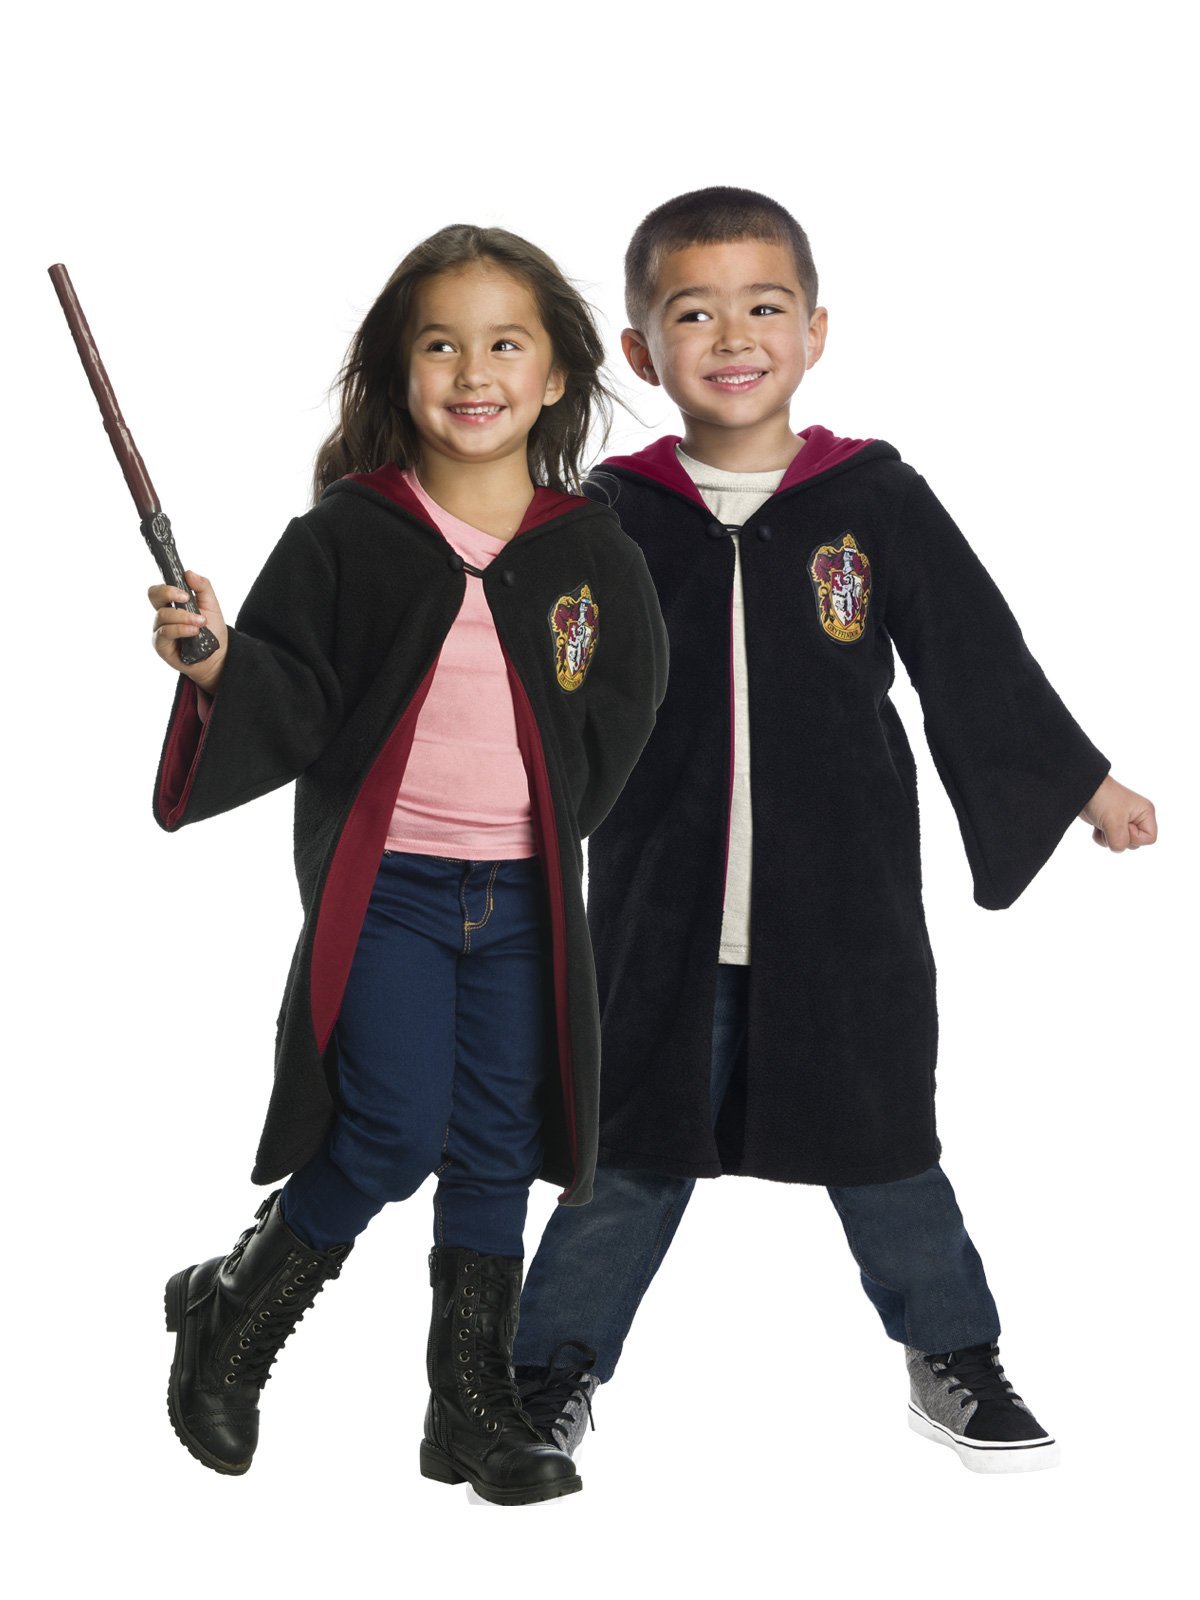 Charades Toddler Harry Potter Gryffindor Student Costume